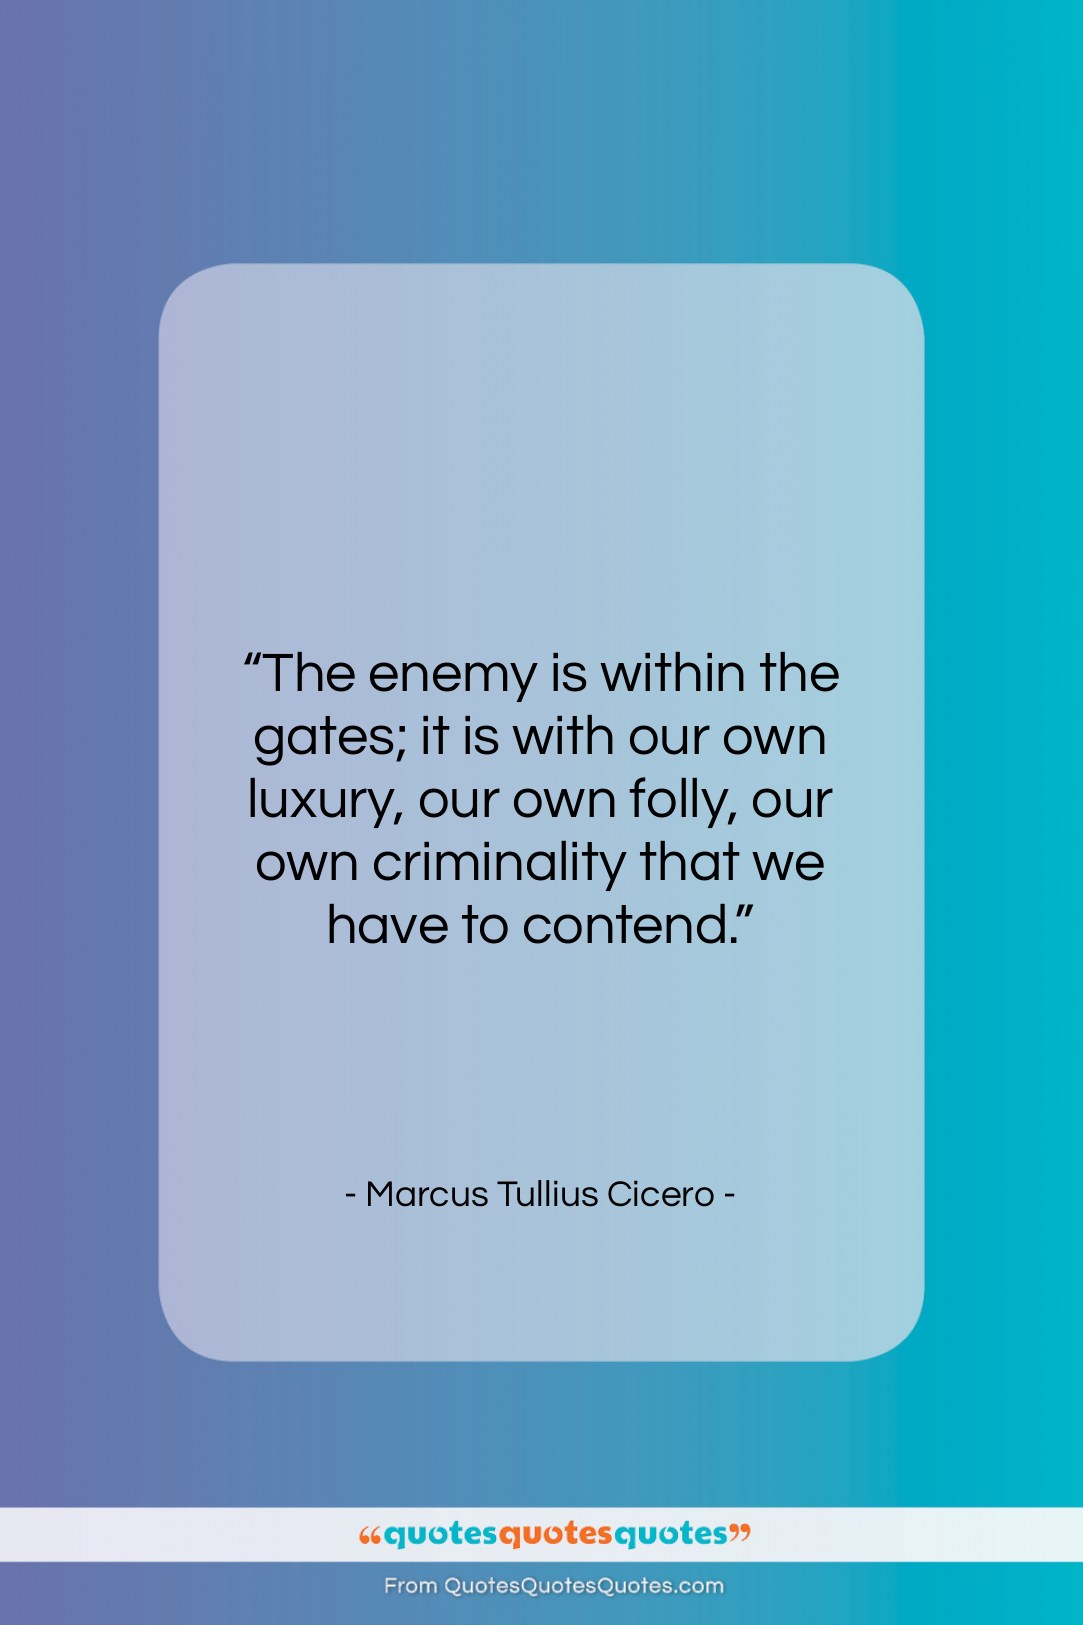 Marcus Tullius Cicero quote: “The enemy is within the gates; it…”- at QuotesQuotesQuotes.com